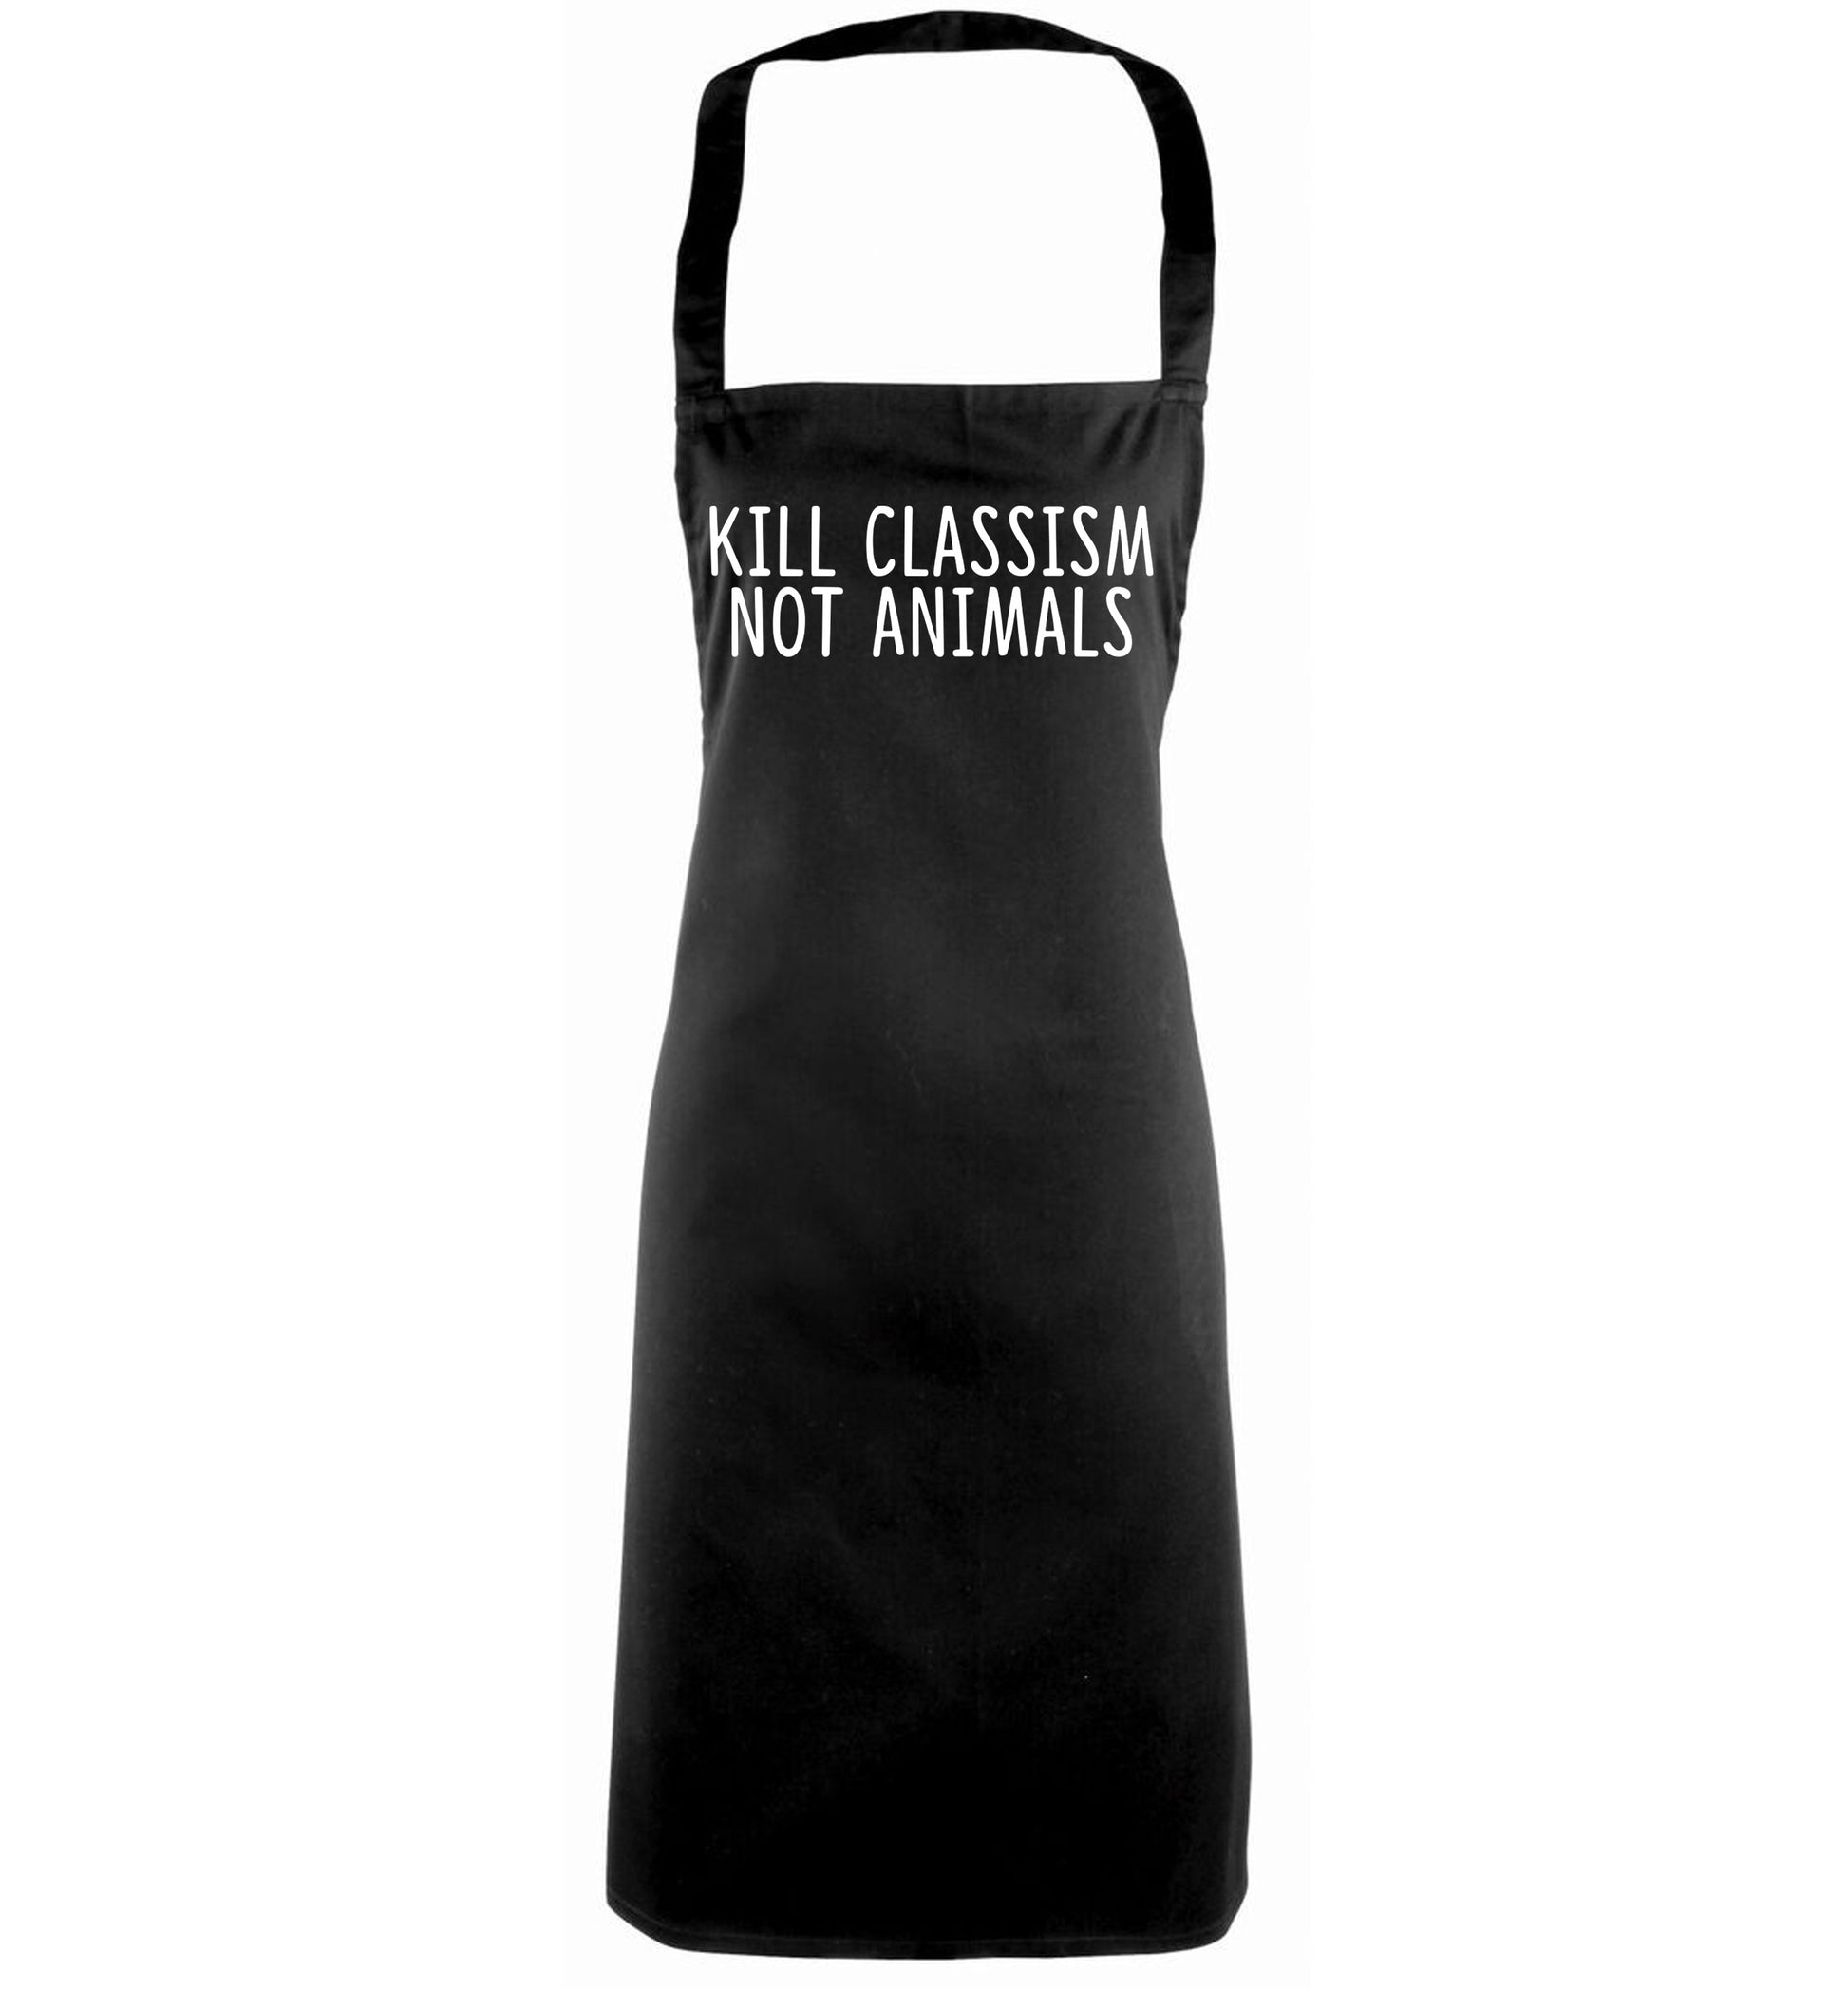 Kill Classism Not Animals black apron